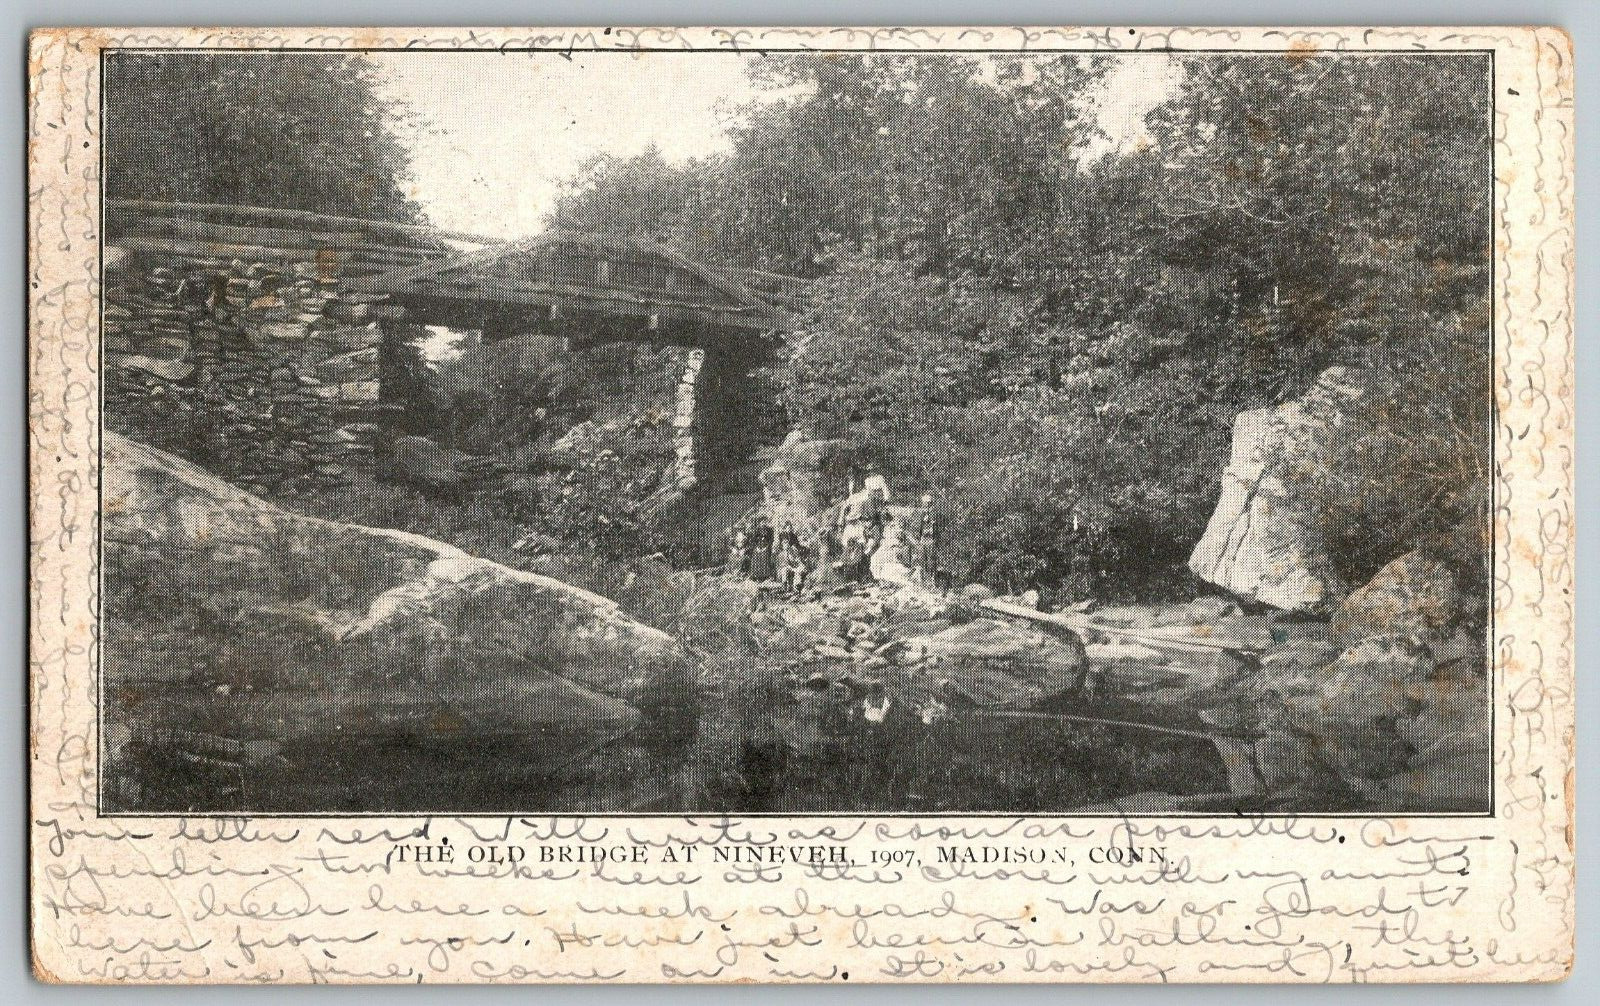 Madison, Connecticut - The Old Bridge at Nineveh - Vintage Postcard - Posted